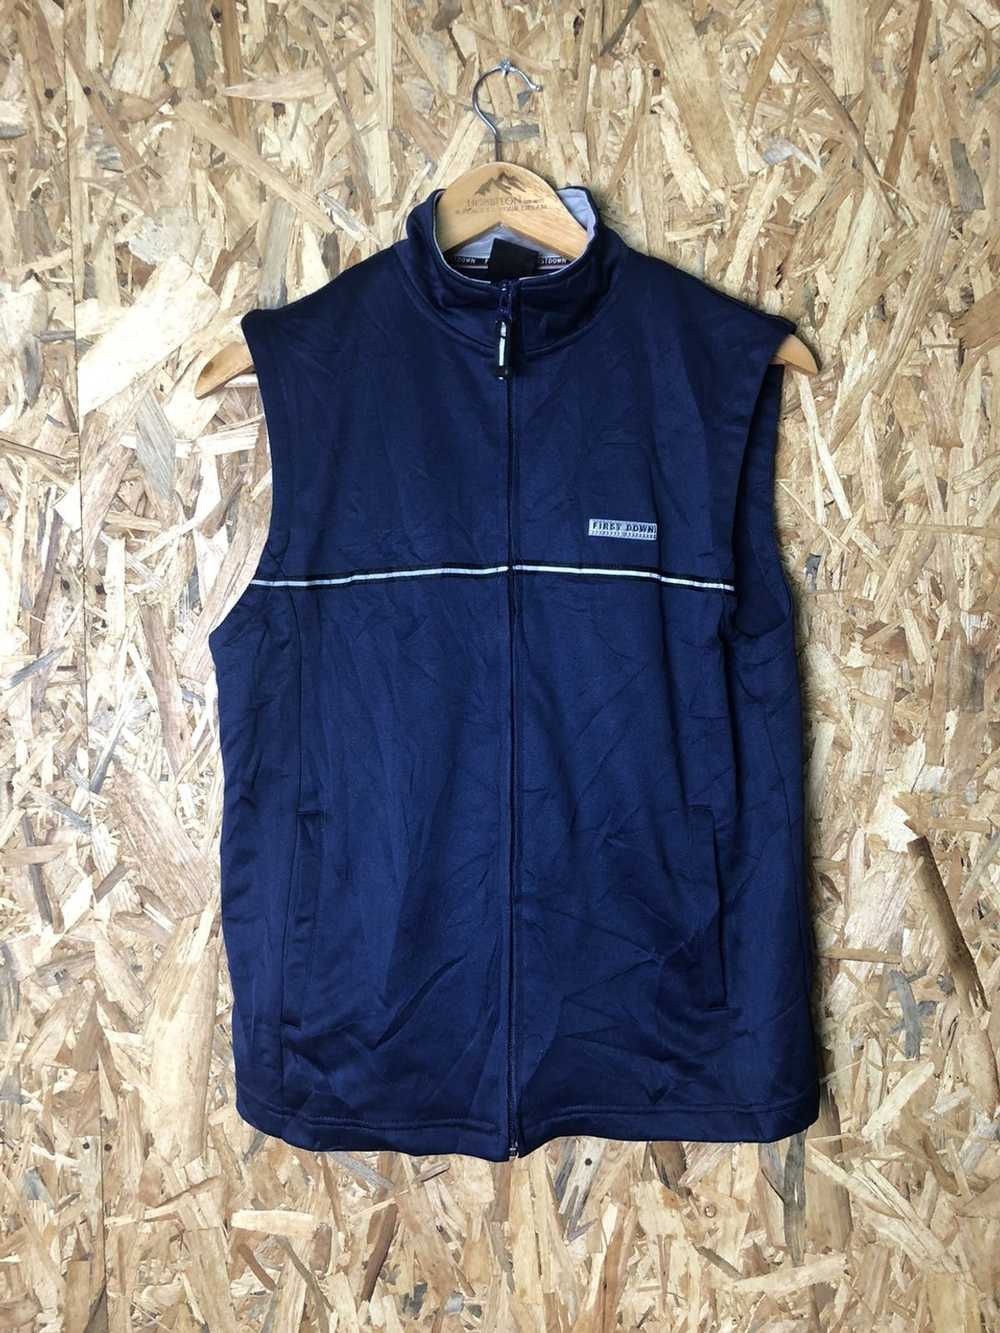 Japanese Brand First Down Vest Zip Nice Design - image 1